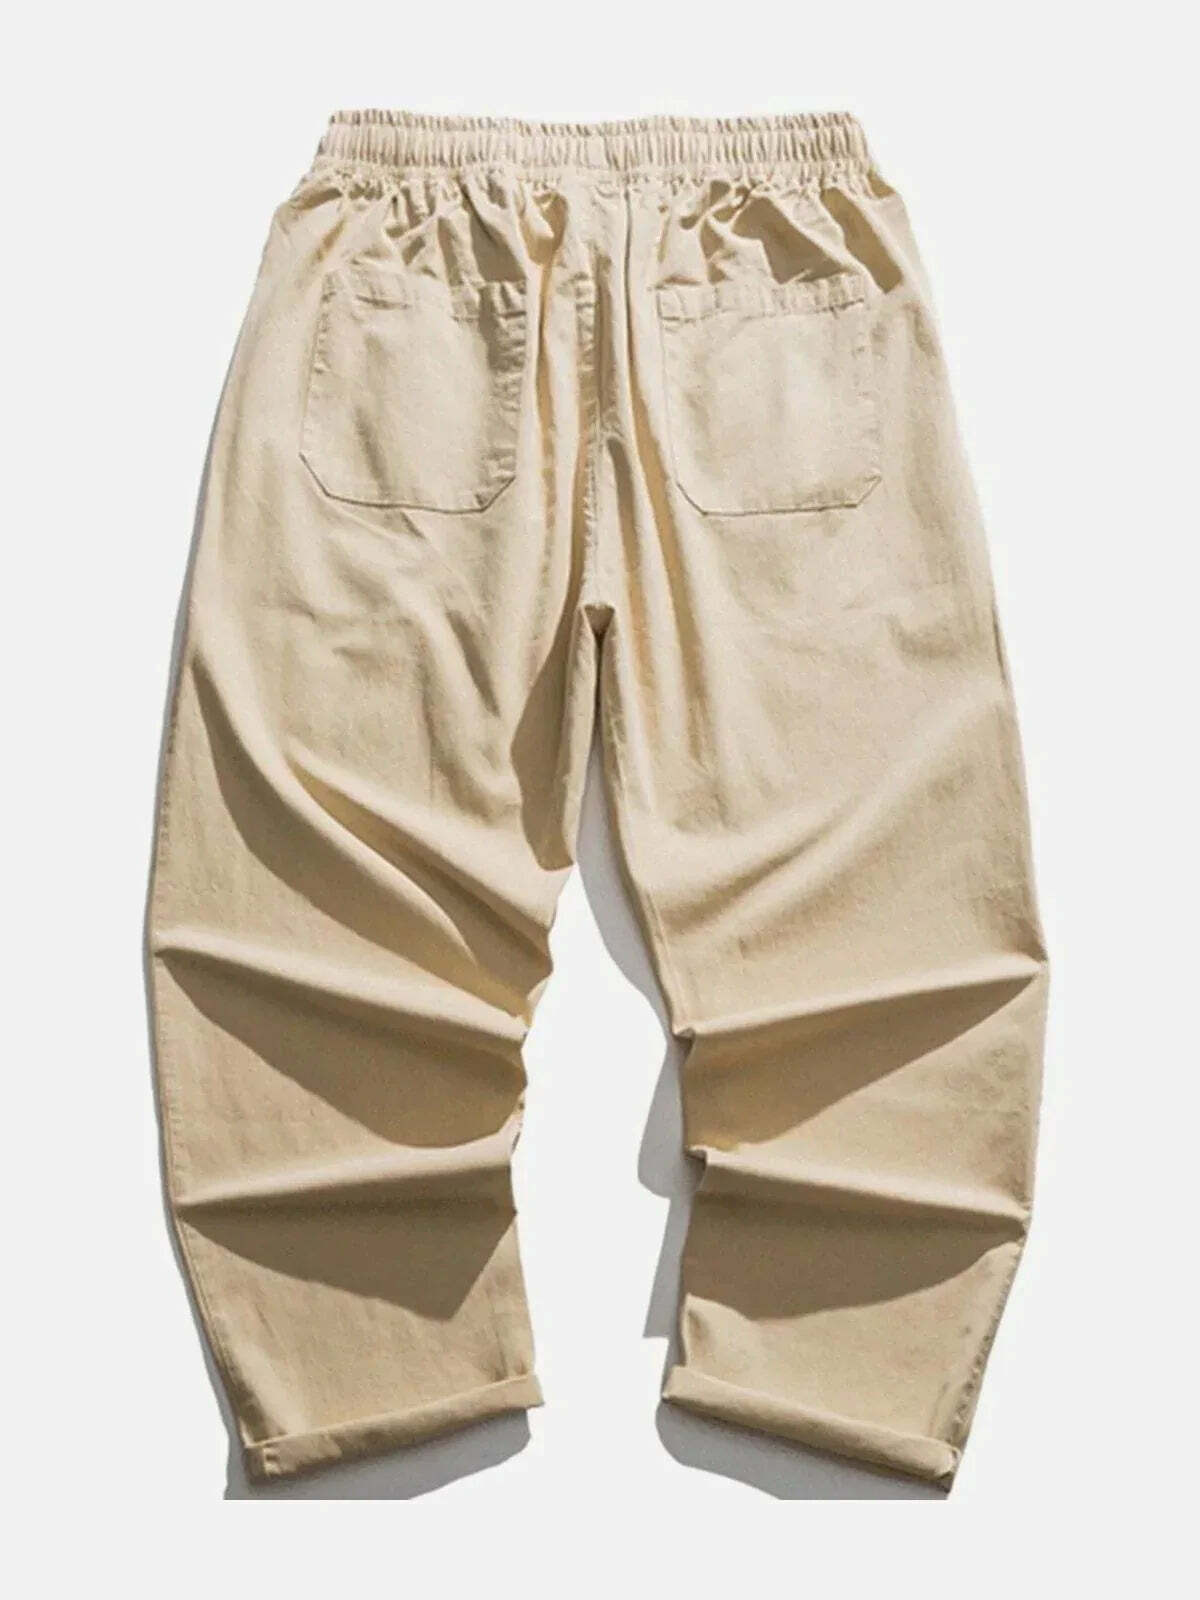 solid streetwear pants edgy & innovative urban style 7064